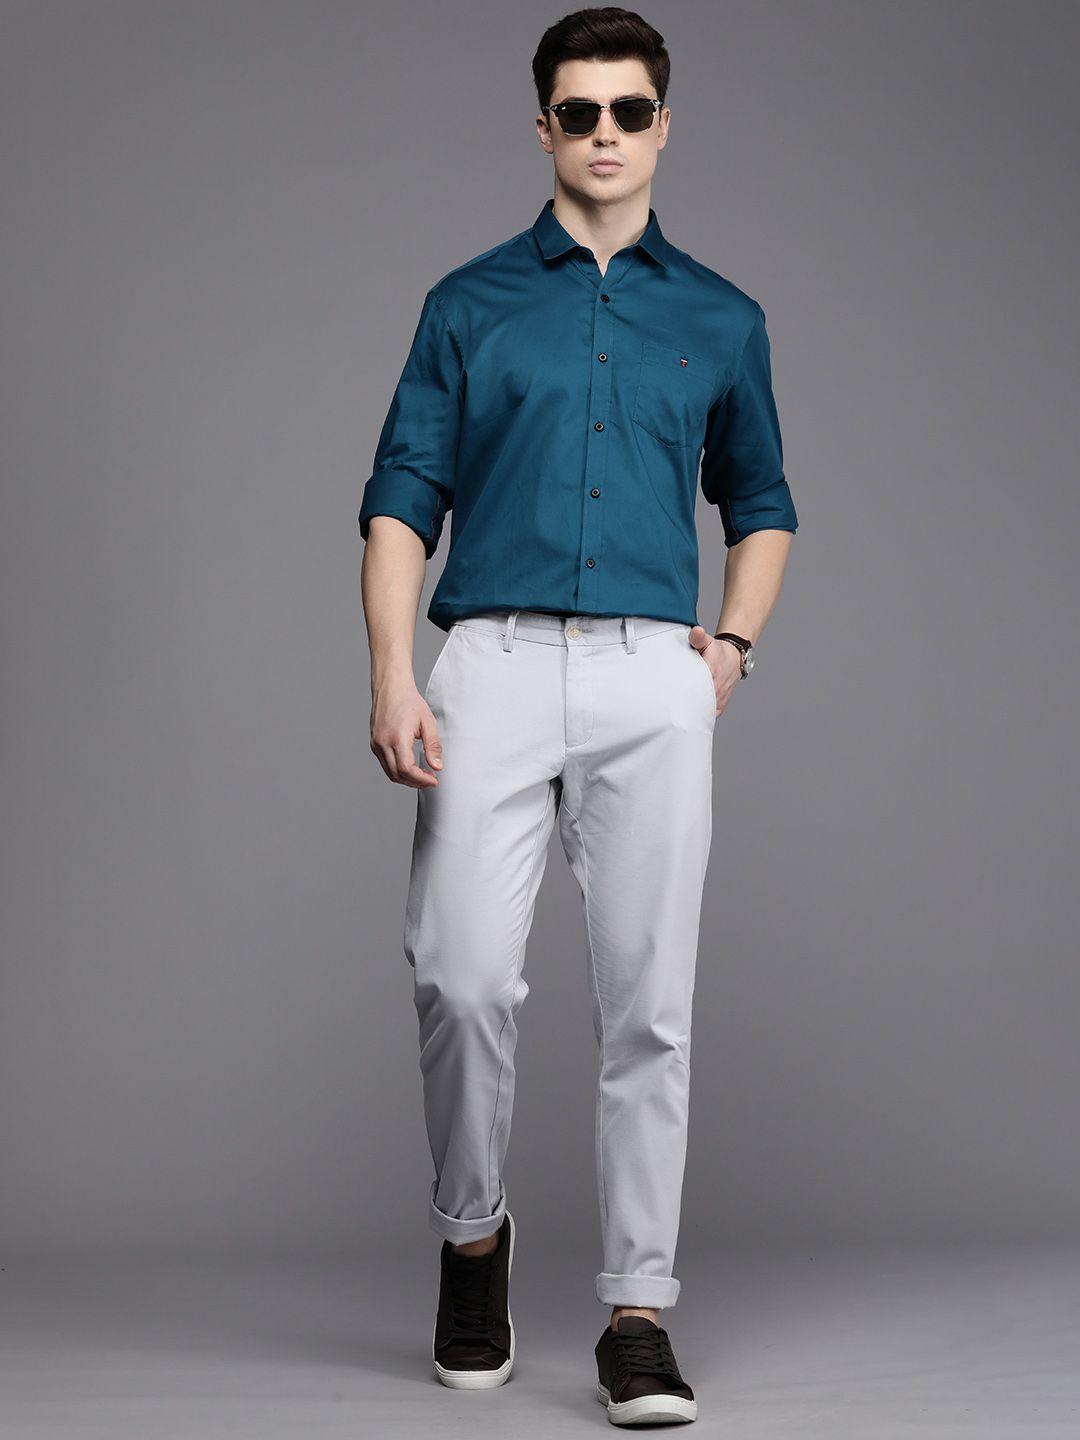 louis-philippe-jeans-men-teal-slim-fit-opaque-pure-cotton-casual-shirt